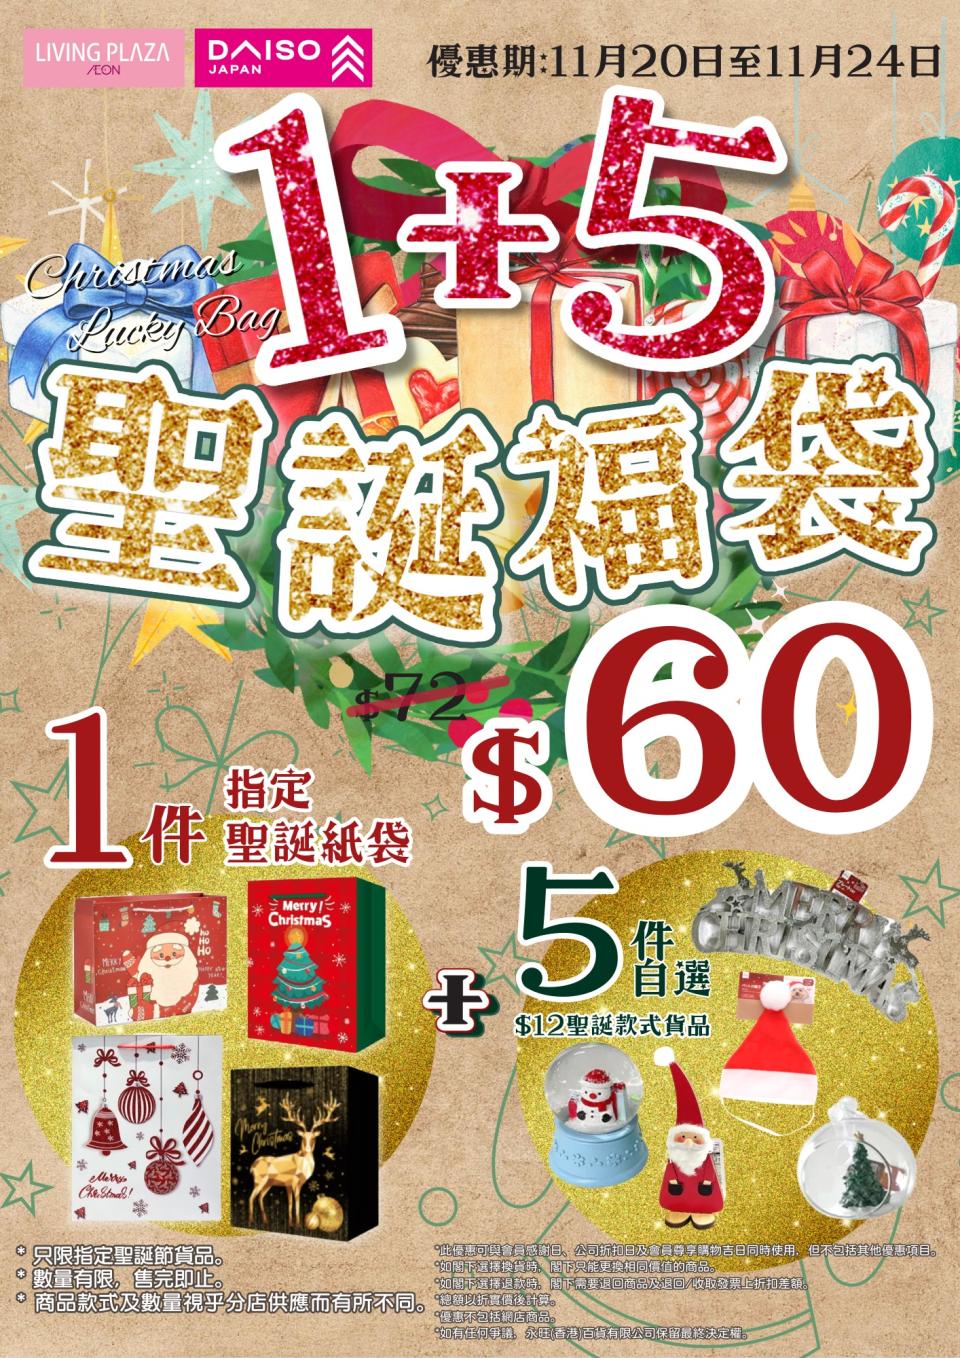 【Aeon】Living Plaza、Daiso Japan聖誕福袋6件組合優惠（20/11-24/11）